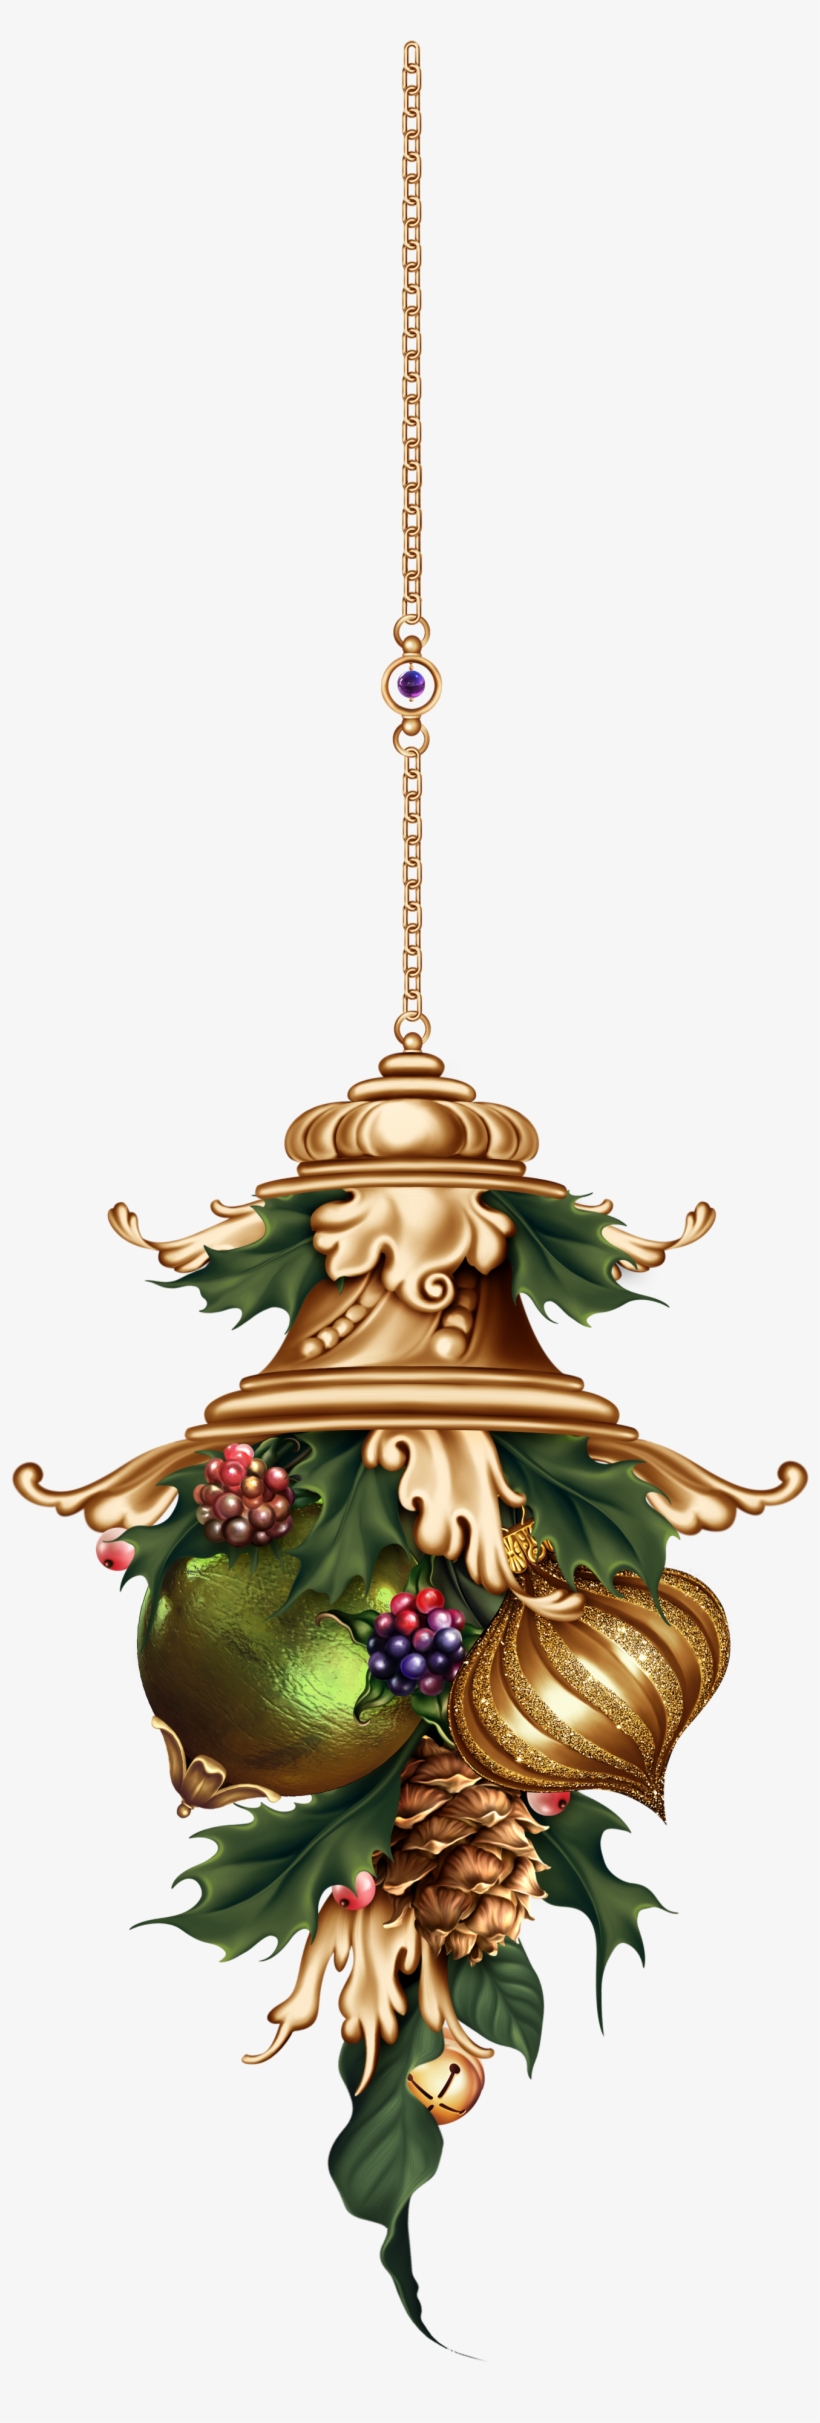 Ornate Christmas Decor Christmas Design, Christmas - Illustration, transparent png #7672778